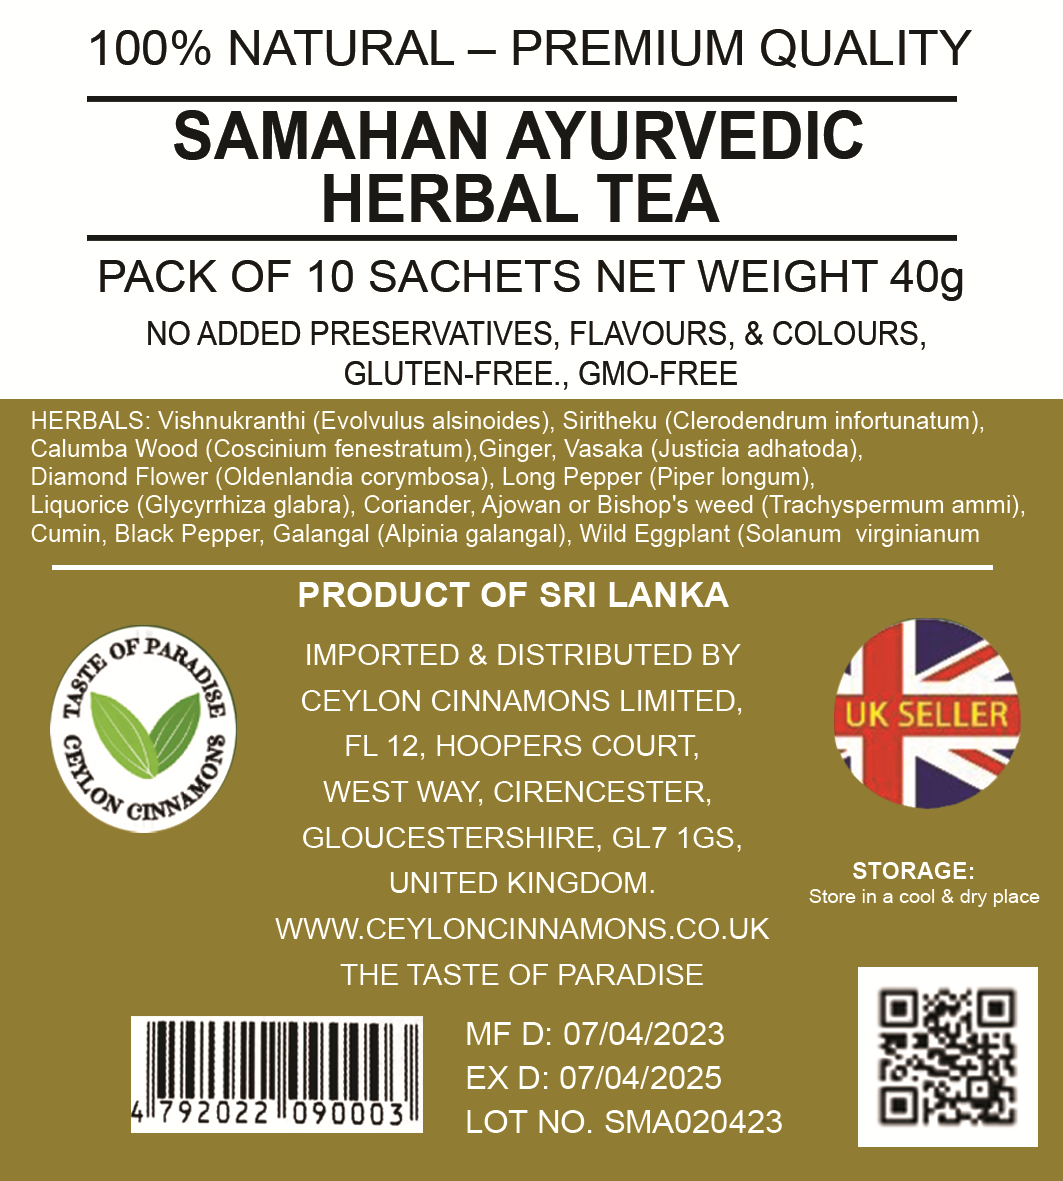 Link Natural Samahan – Taste of Sri Lanka